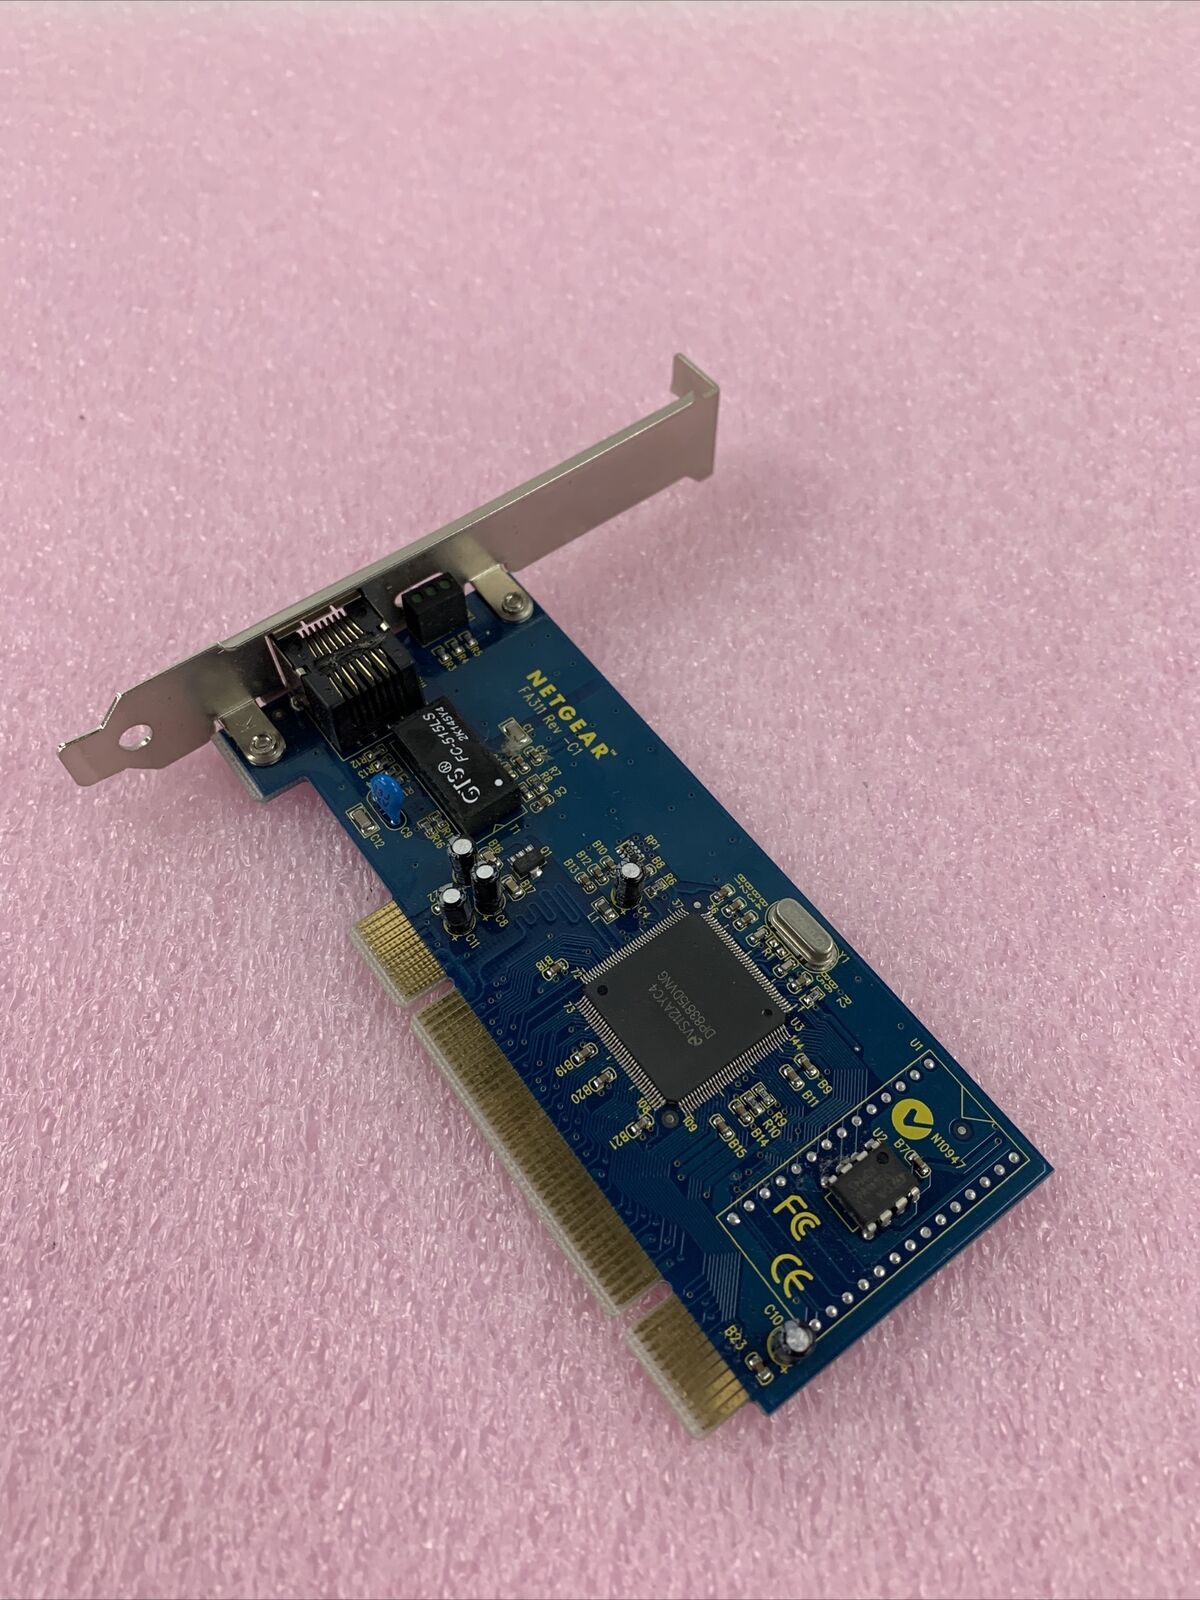 NETGEAR FA311 REV-C1 PCI Network Card